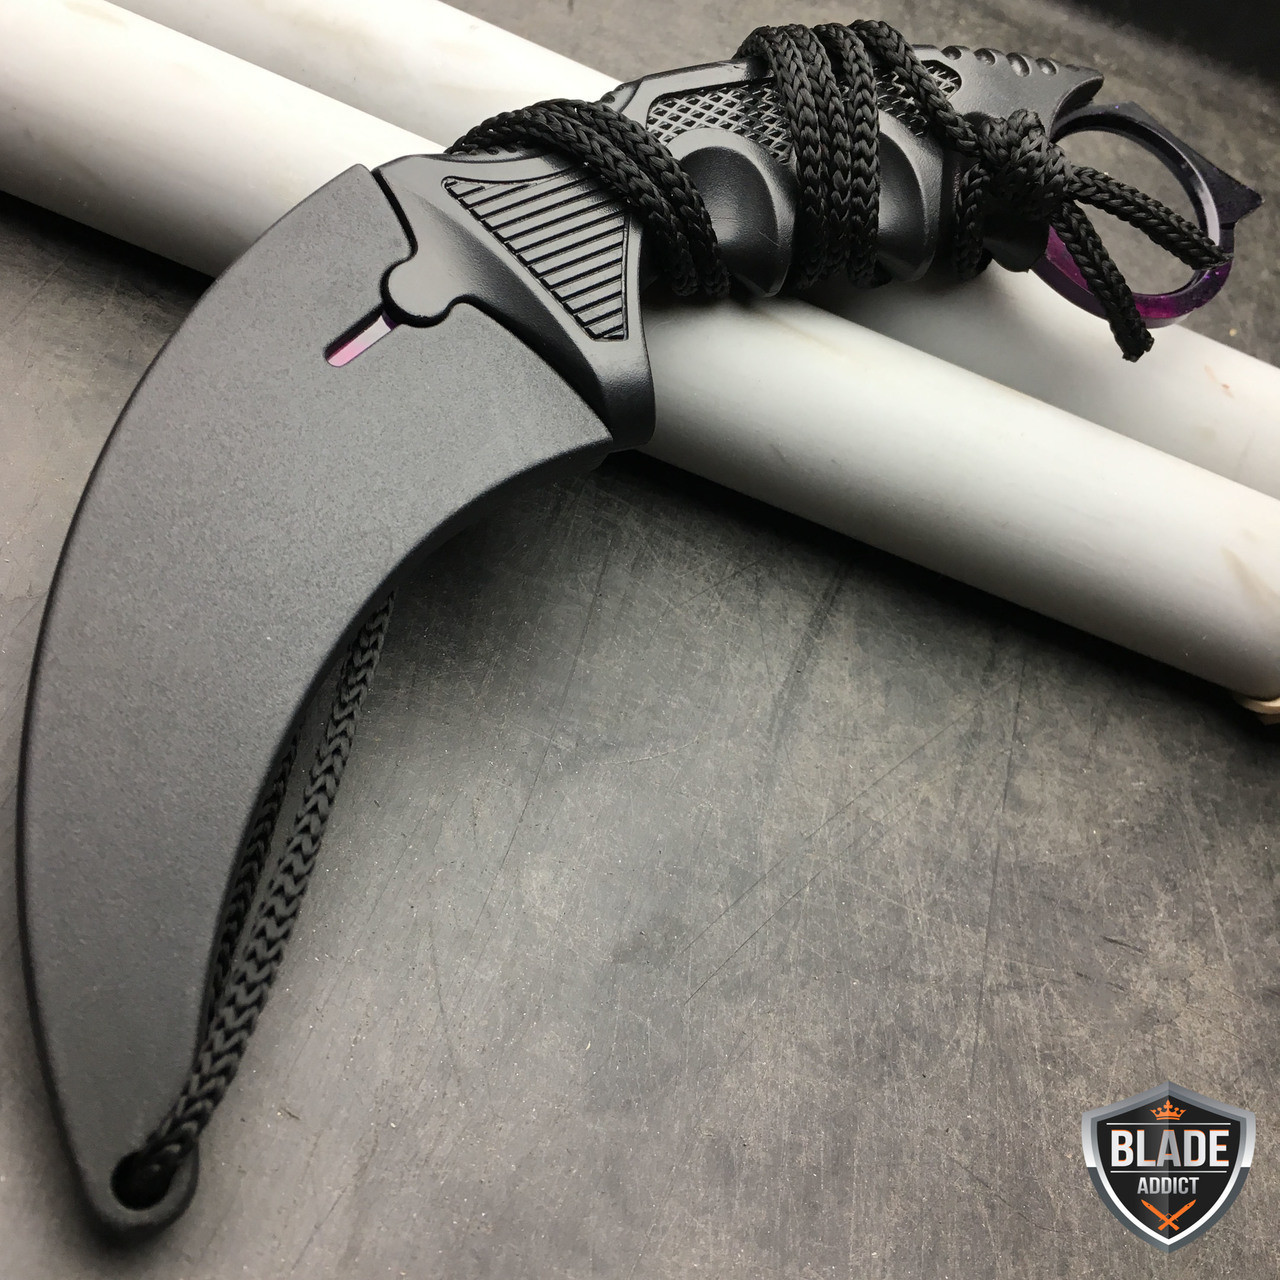 3 PC CSGO White Galaxy Gut Hook Fixed Blade Bayonet Knife Karambit SET